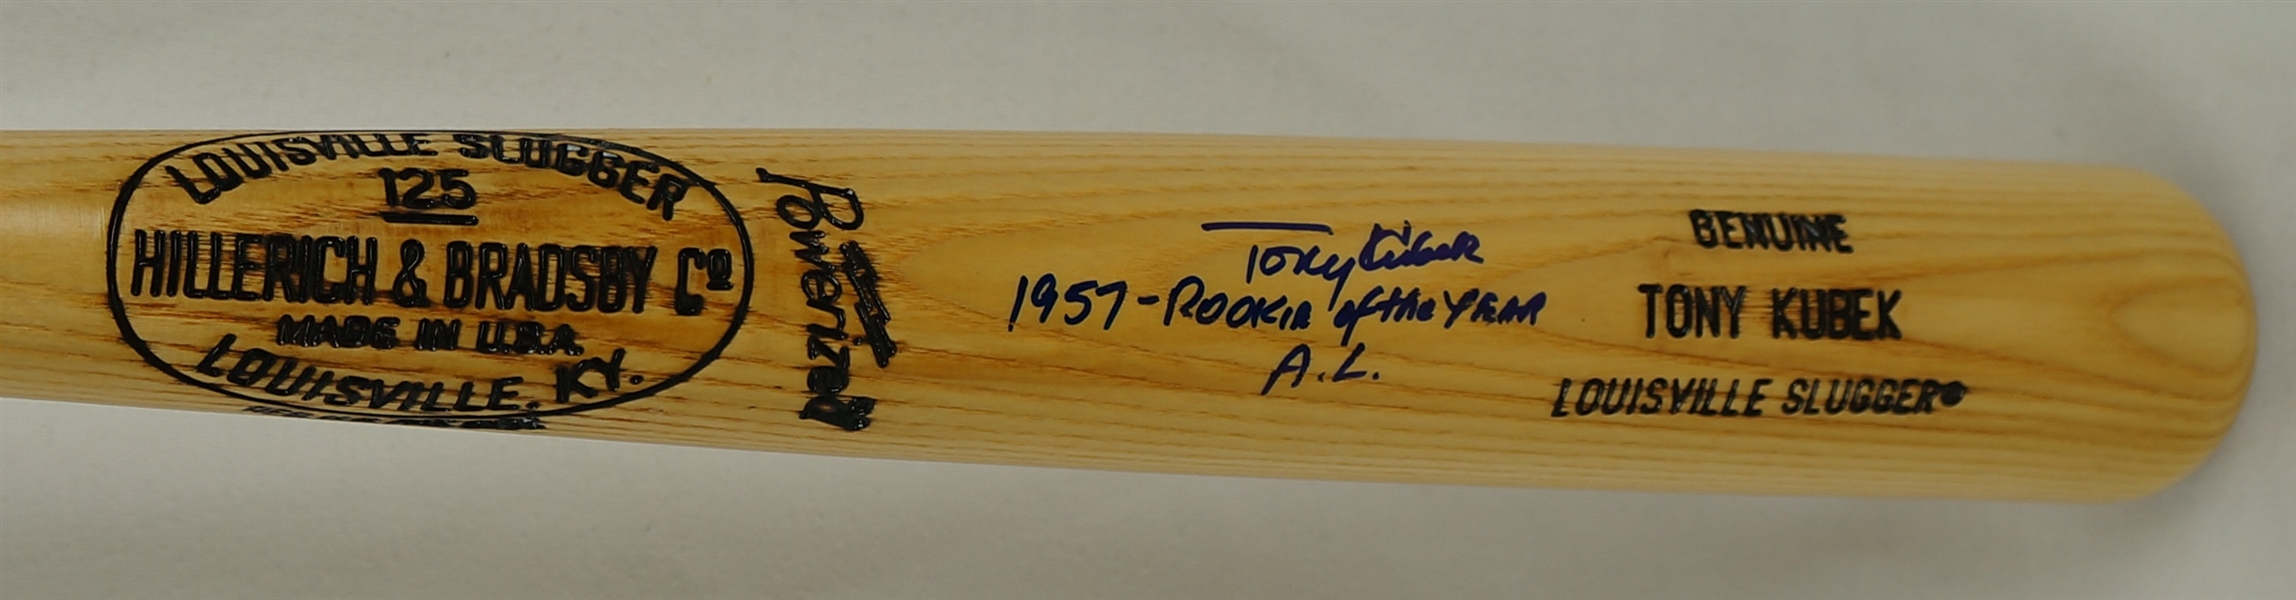 Tony Kubek 1957 AL ROY Autographed & Inscribed Bat